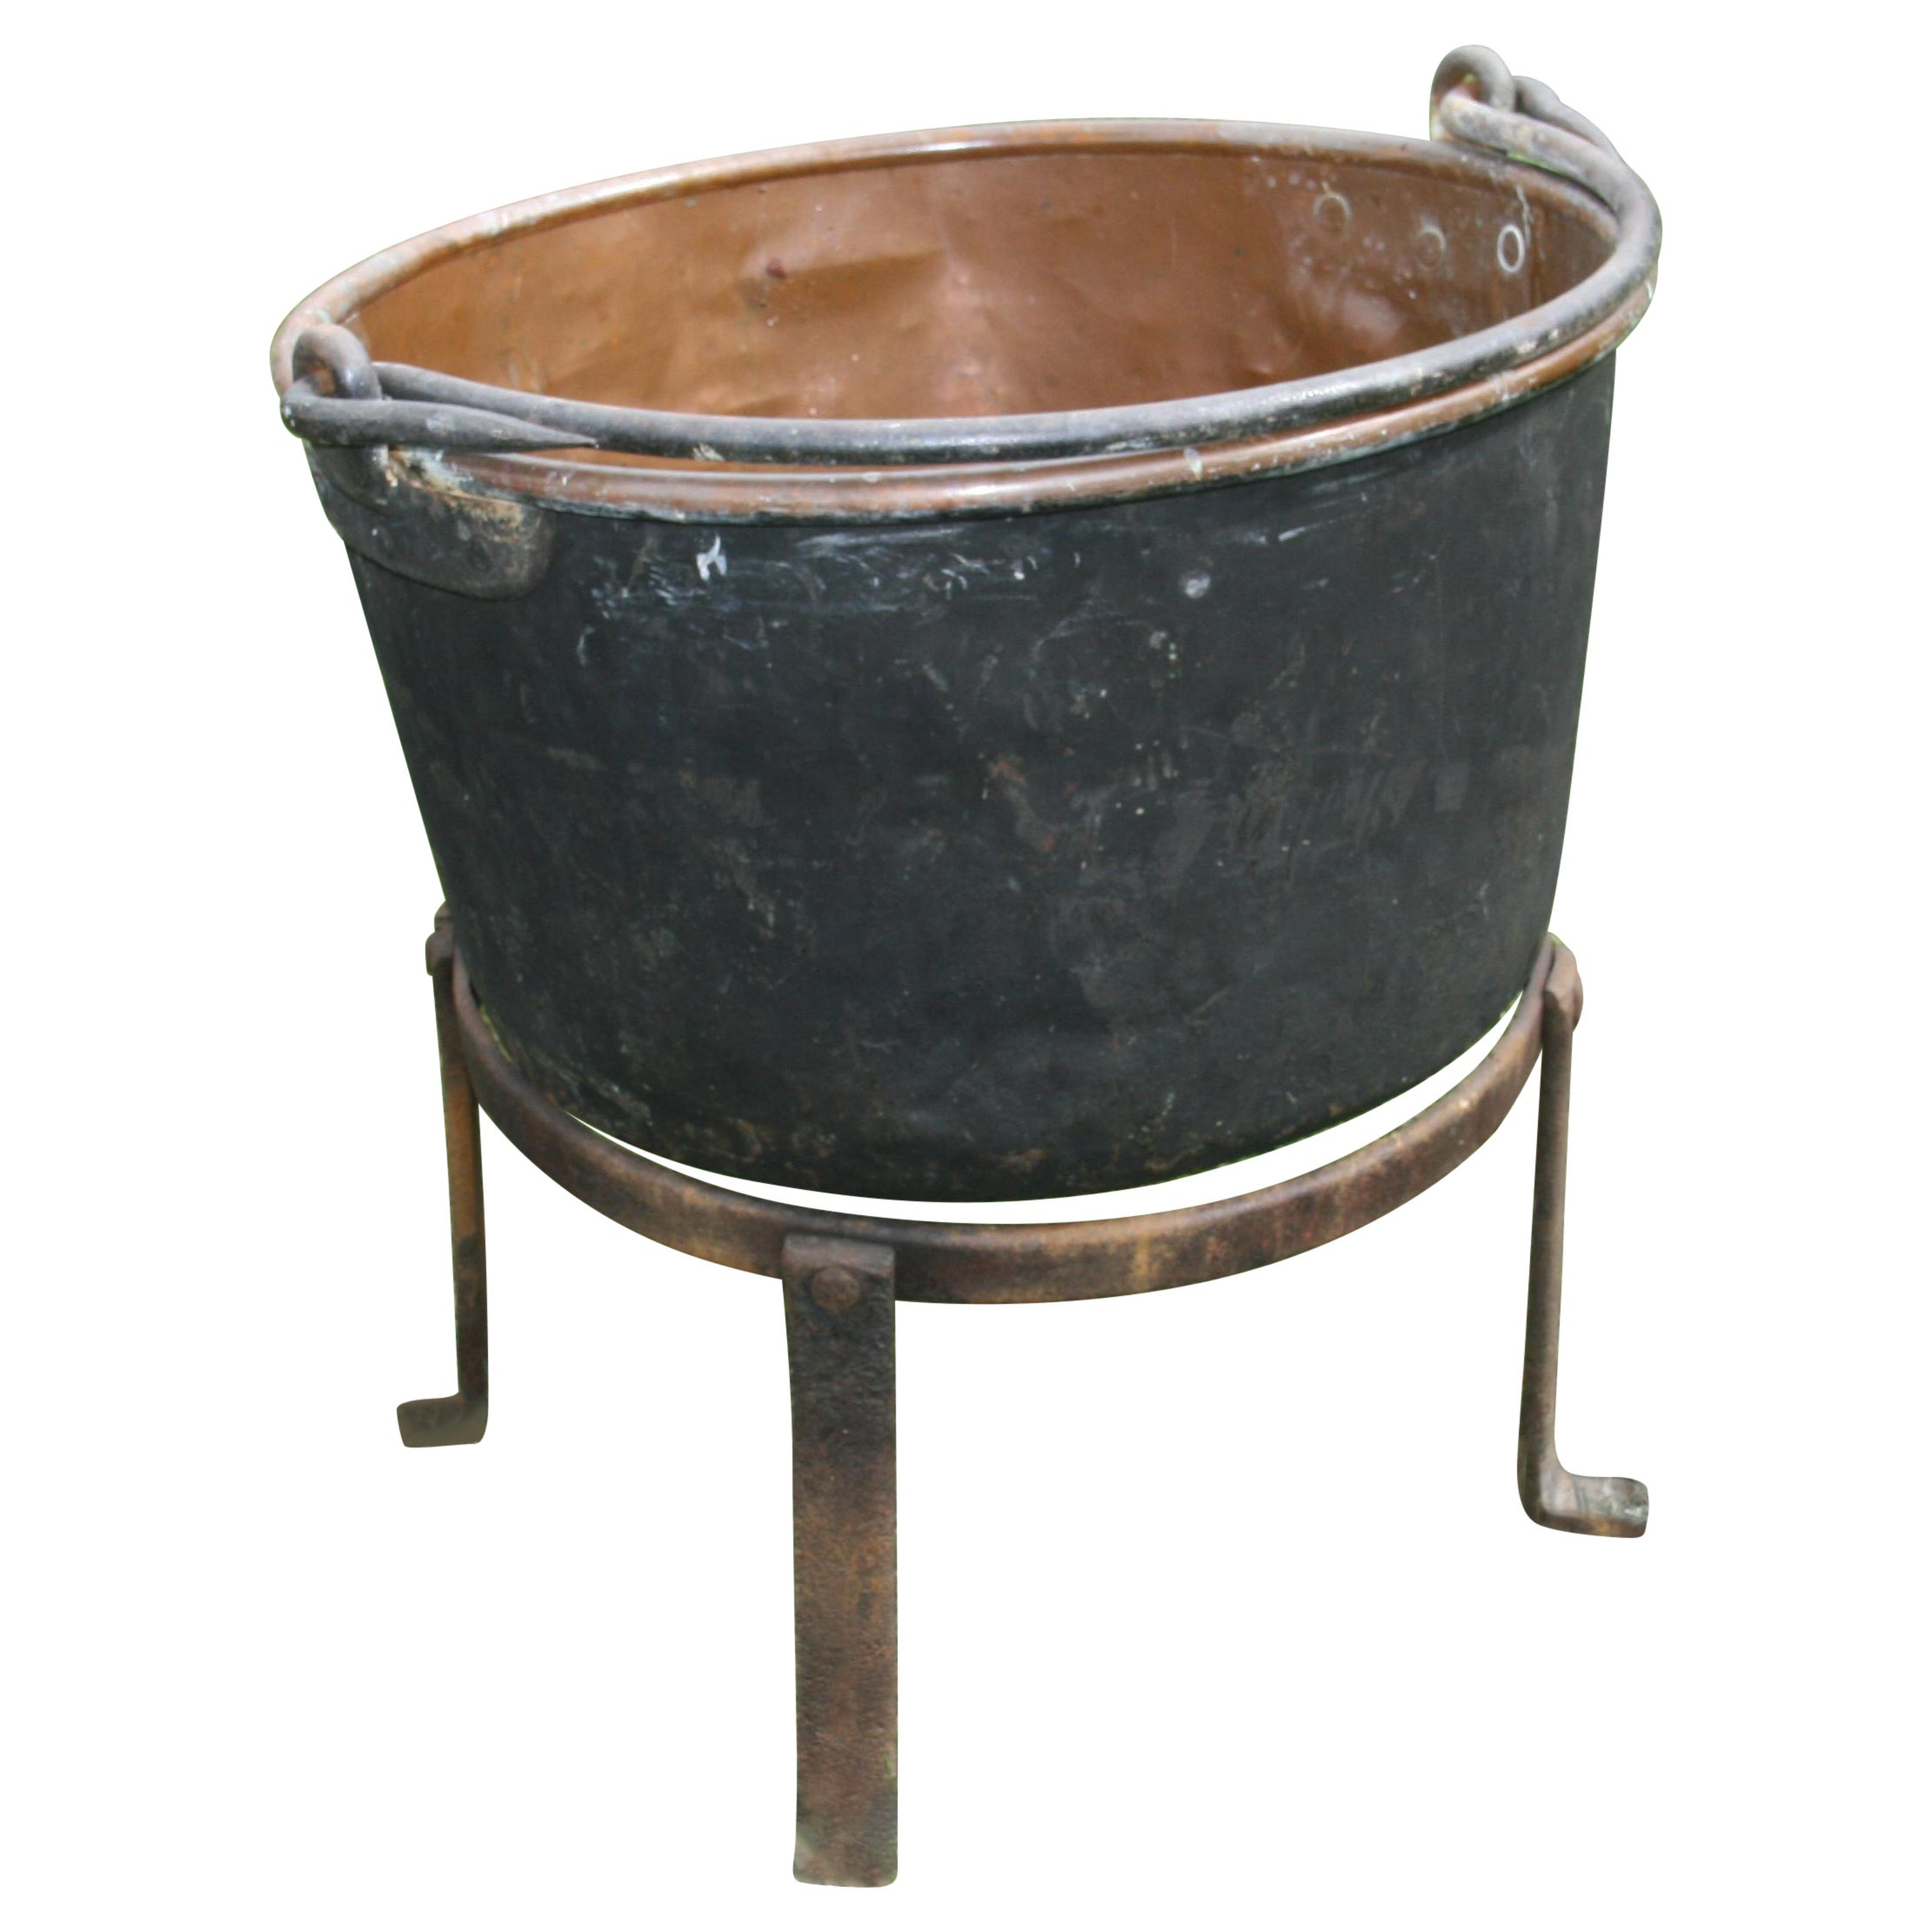 Großes Kupfer  Cauldron-Topf auf Eisensockel/Pflanzgefäß/Log Bin aus dem 19. Jahrhundert